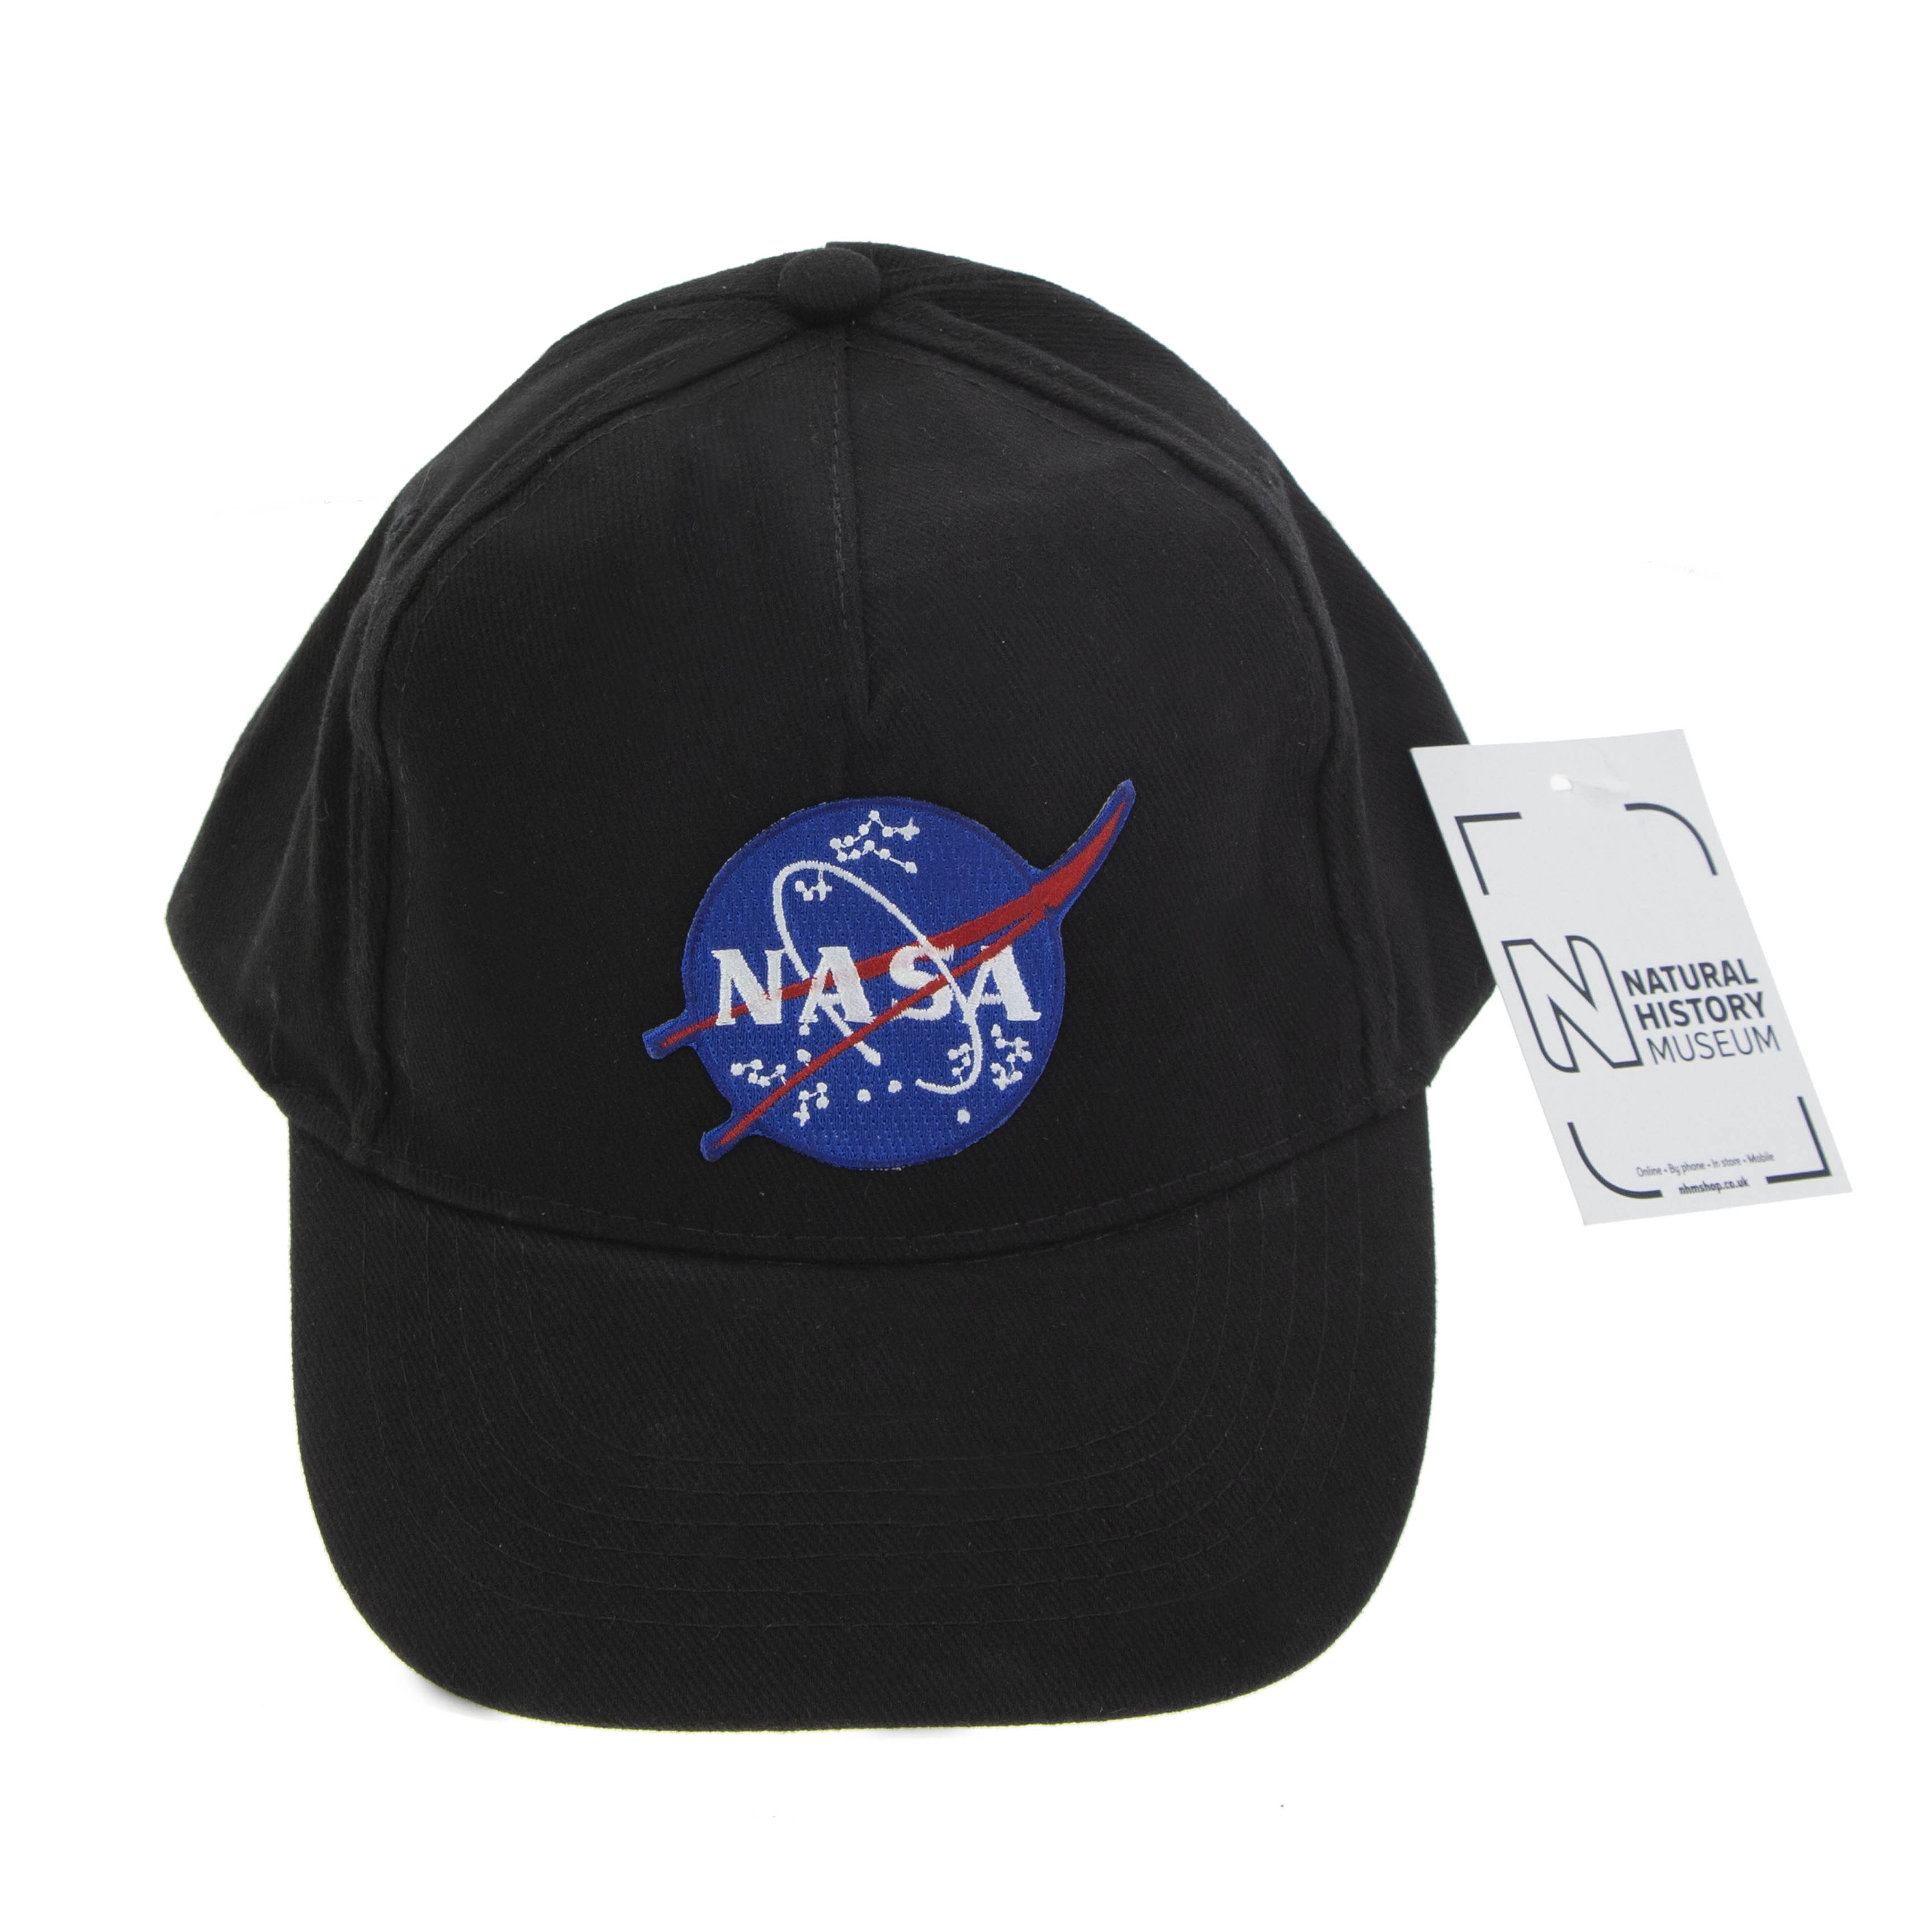 NASA logo baseball cap for adults